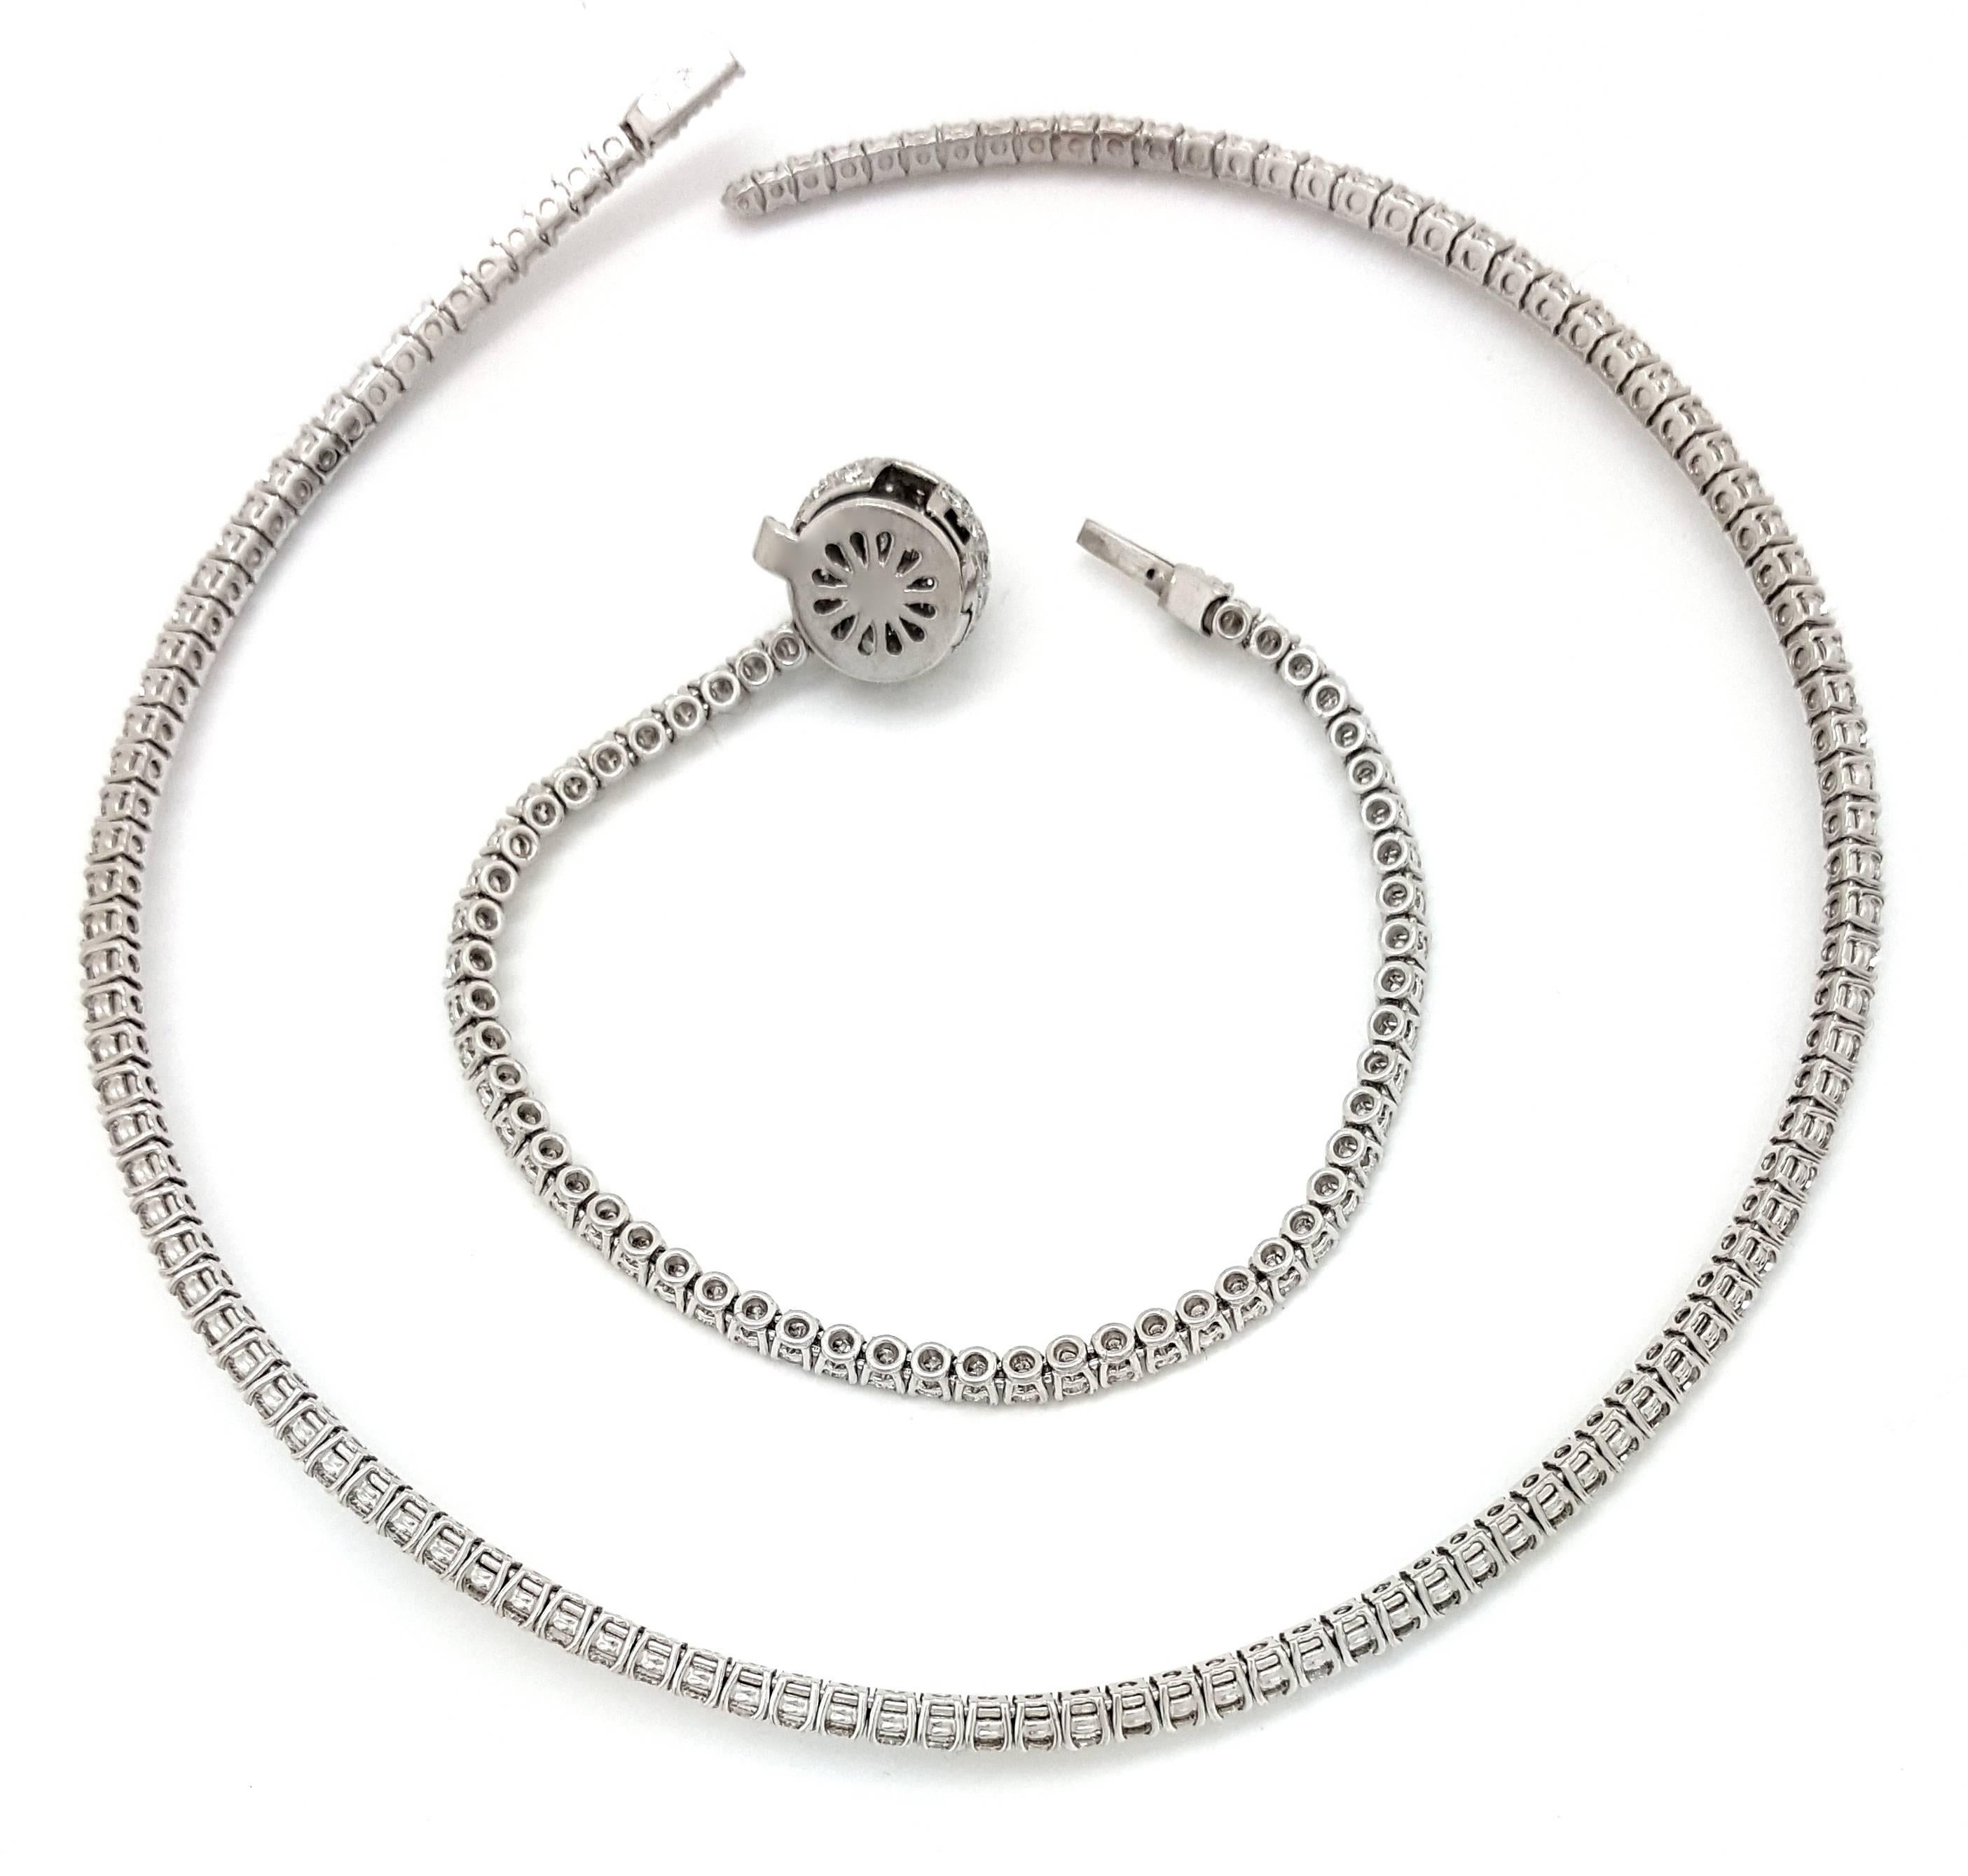 Stefan Hafner 11.93 Carats Diamonds Gold Collar Necklace Bracelet In New Condition For Sale In Scottsdale, AZ